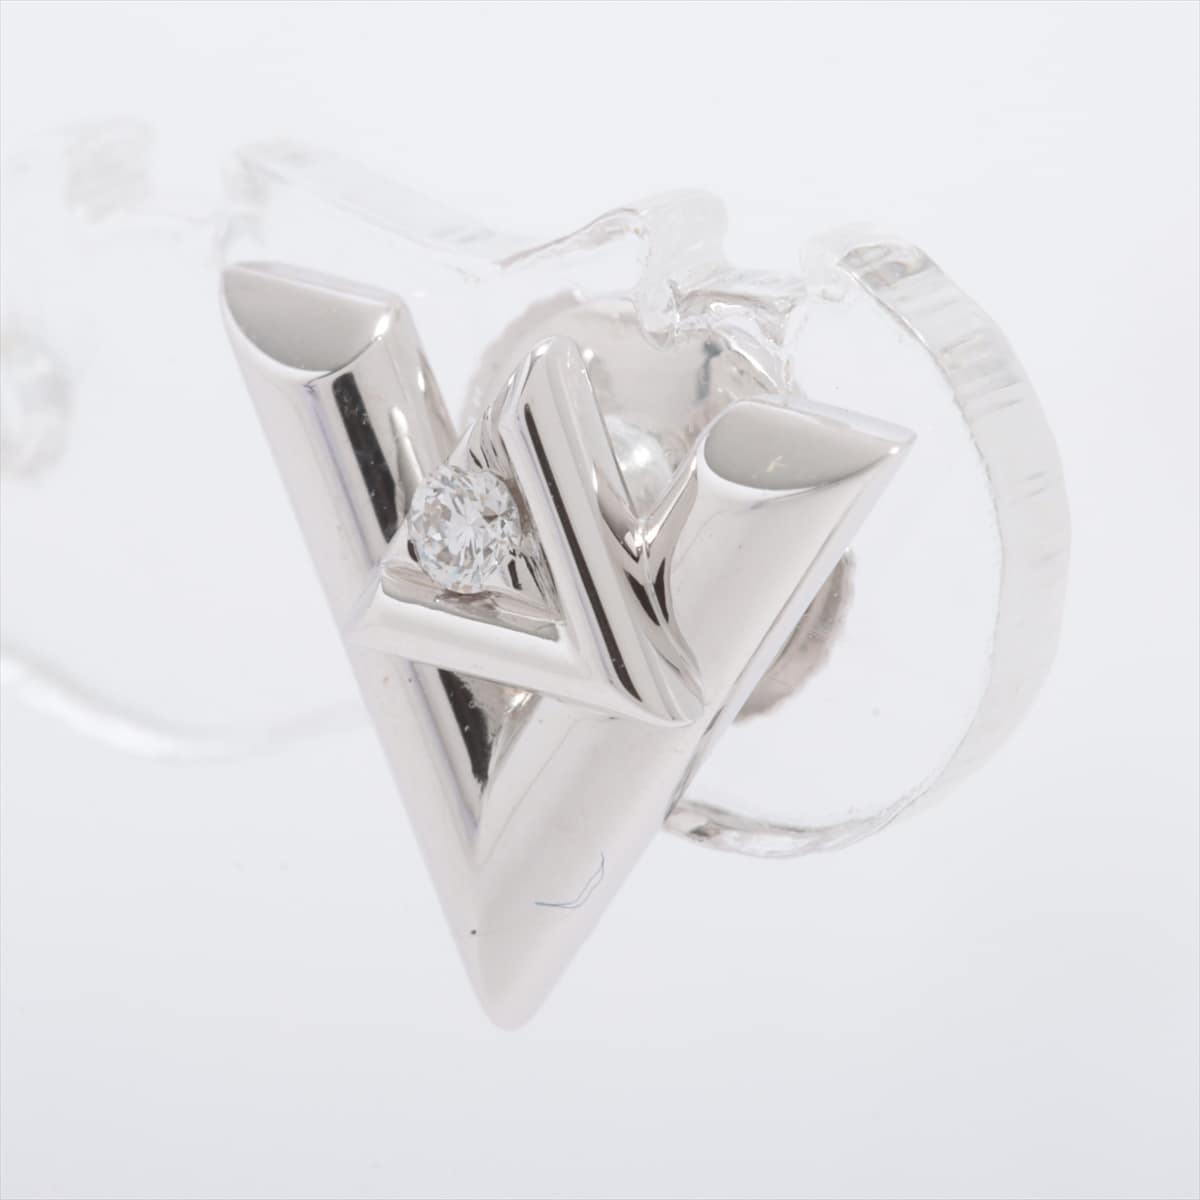 Louis Vuitton Puz LV Vault Wang diamond Piercing jewelry 750(WG) 1.8g